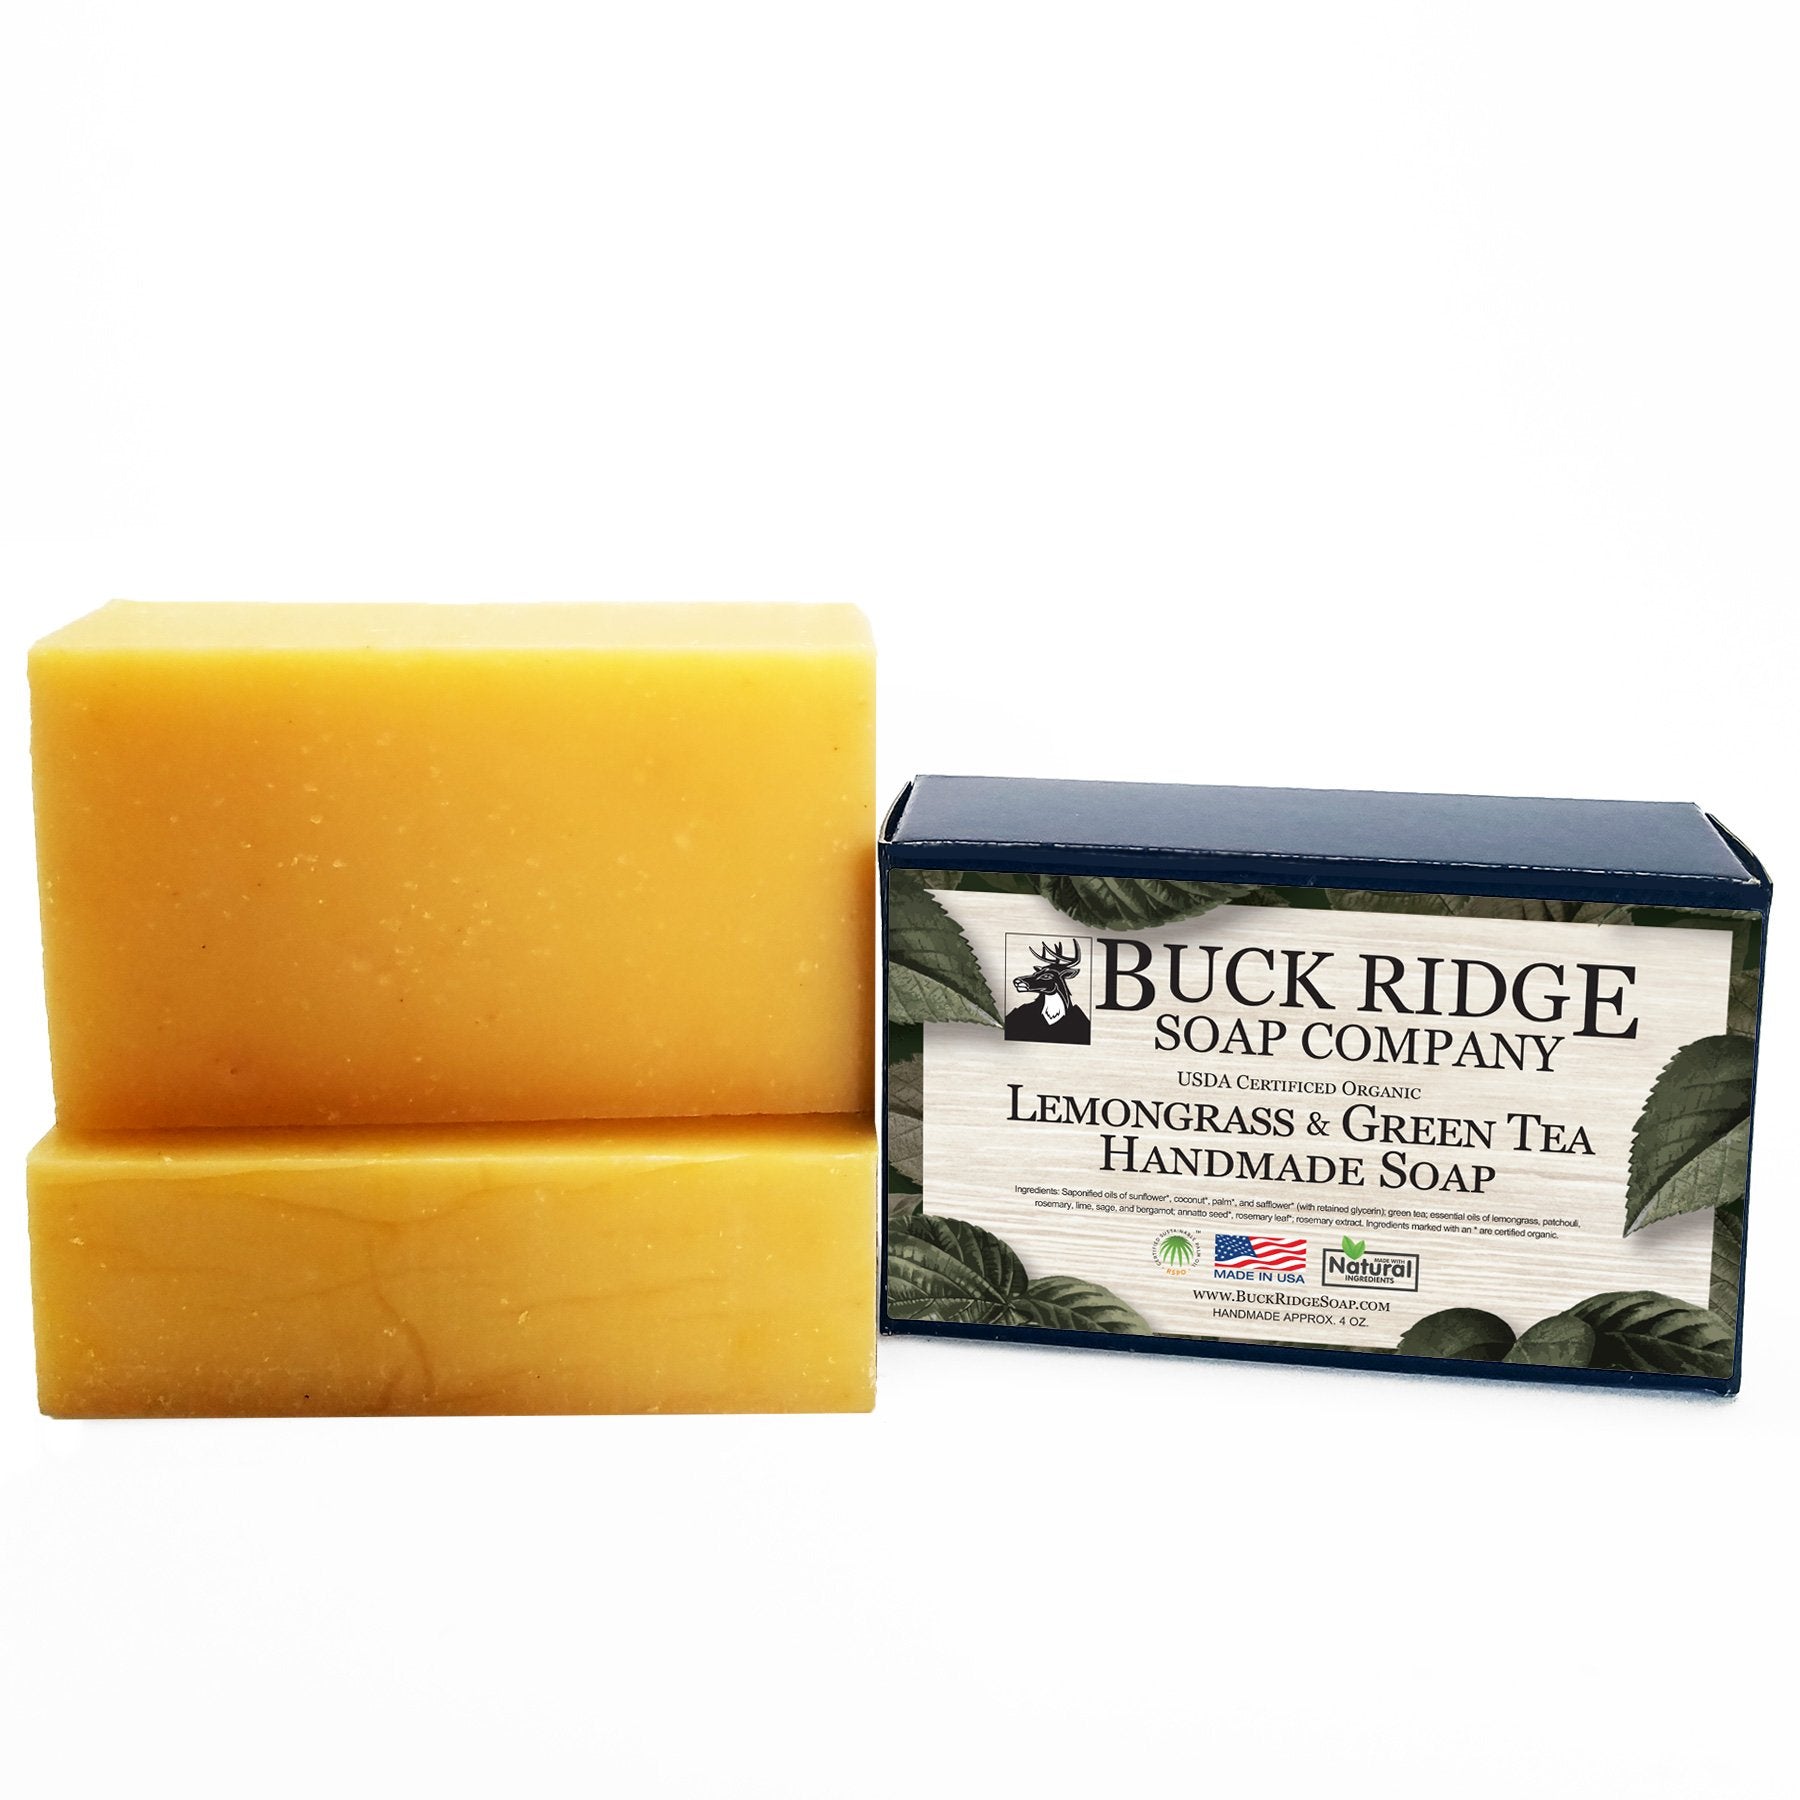 Lemongrass and Green Tea Handmade Soap - USDA Certified Organic